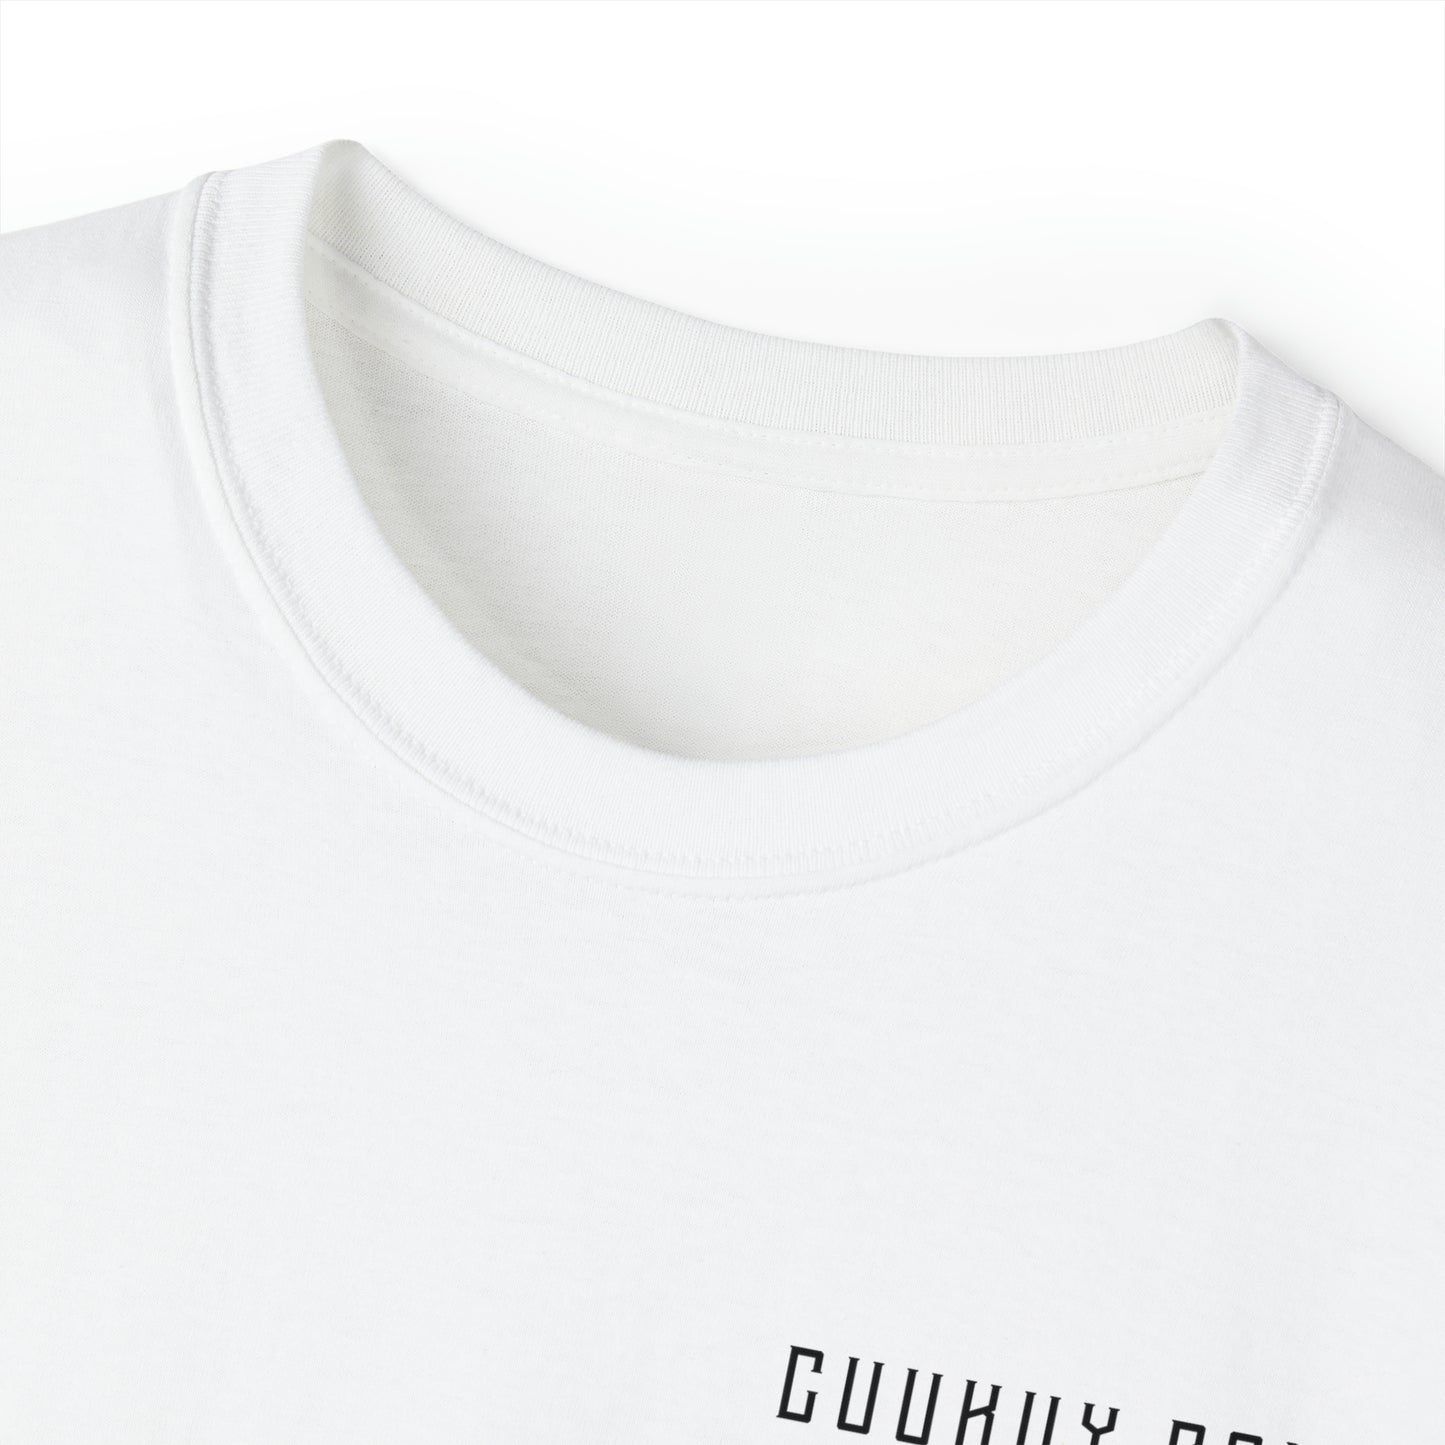 Cuukuy Geometric Owl T-Shirt - Black, White